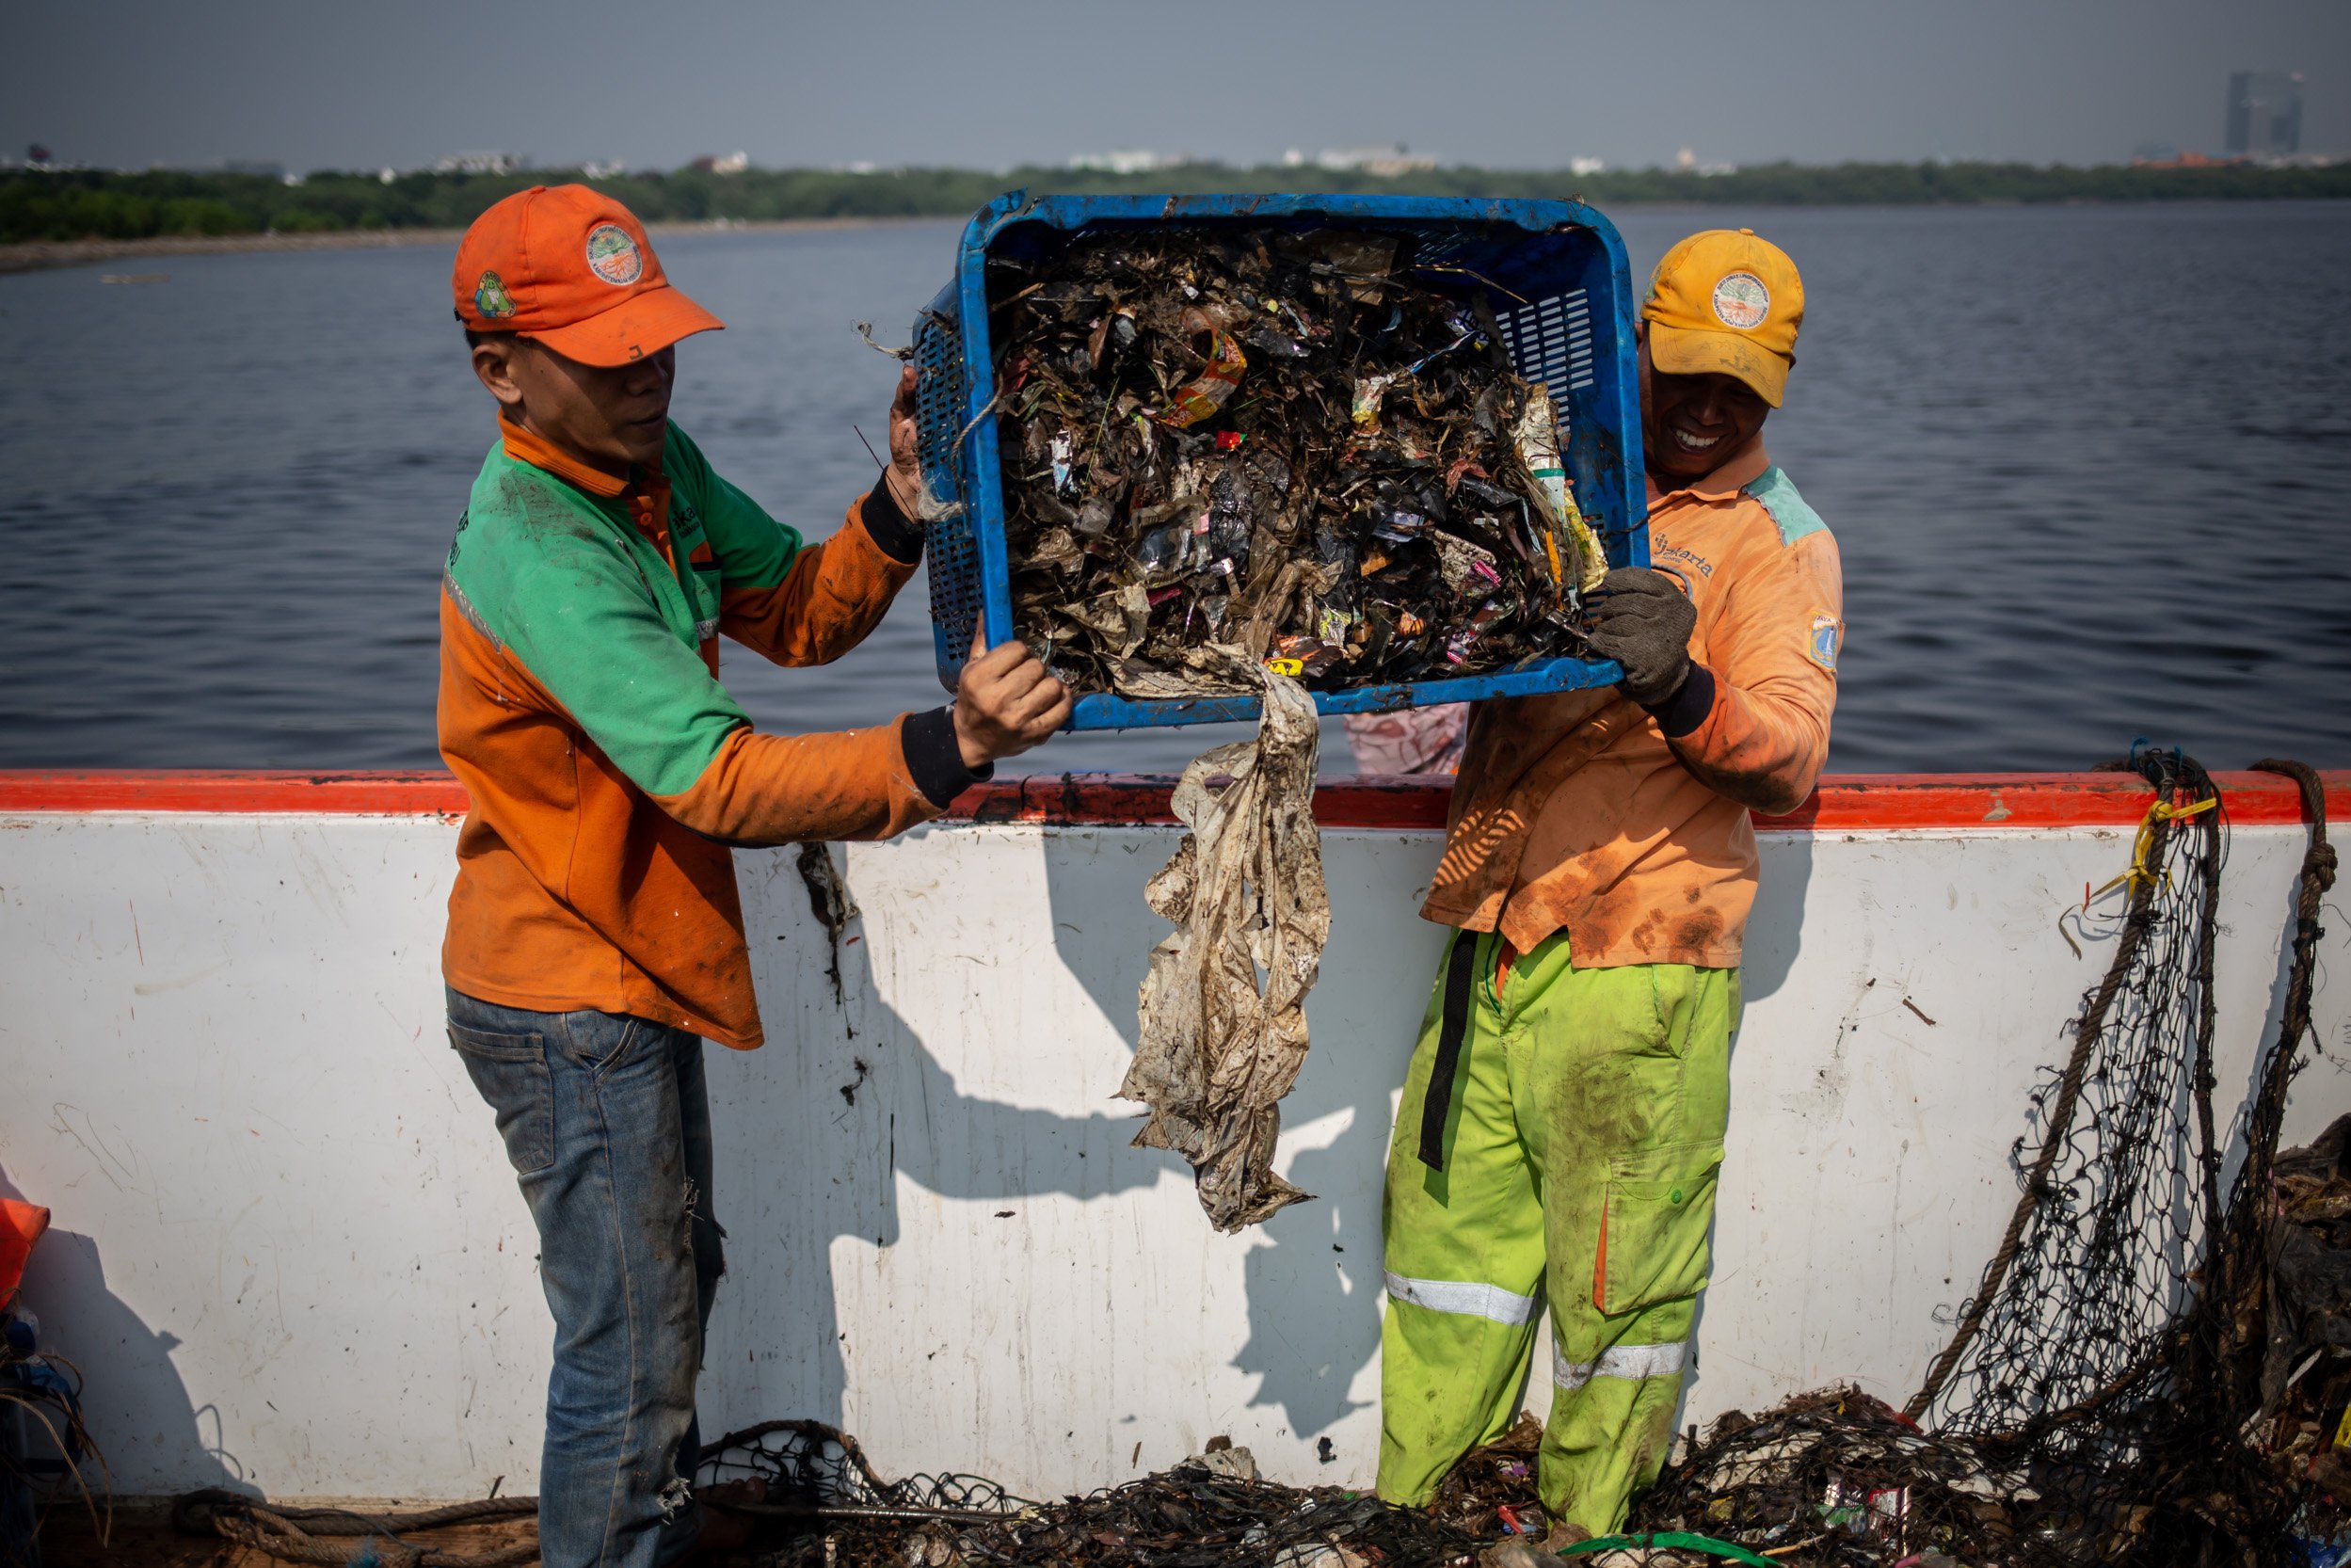 Petugas Penanganan Prasarana & Sarana Umum (PPSU) bersama Dinas Lingkungan Hidup DKI Jakarta membersihkan sampah yang menumpuk di hutan mangrove Muara Angke, Penjaringan, Jakarta Utara, Jumat (13/7). Berdasarkan hasil penelitian BRIN, sampah yang terperangkap di Hutan Mangrove Muara Angke bersumber dari wilayah yang tidak jauh dari kawasan mangrove tersebut. Jaraknya sekitar 10 sampai 30 kilometer.